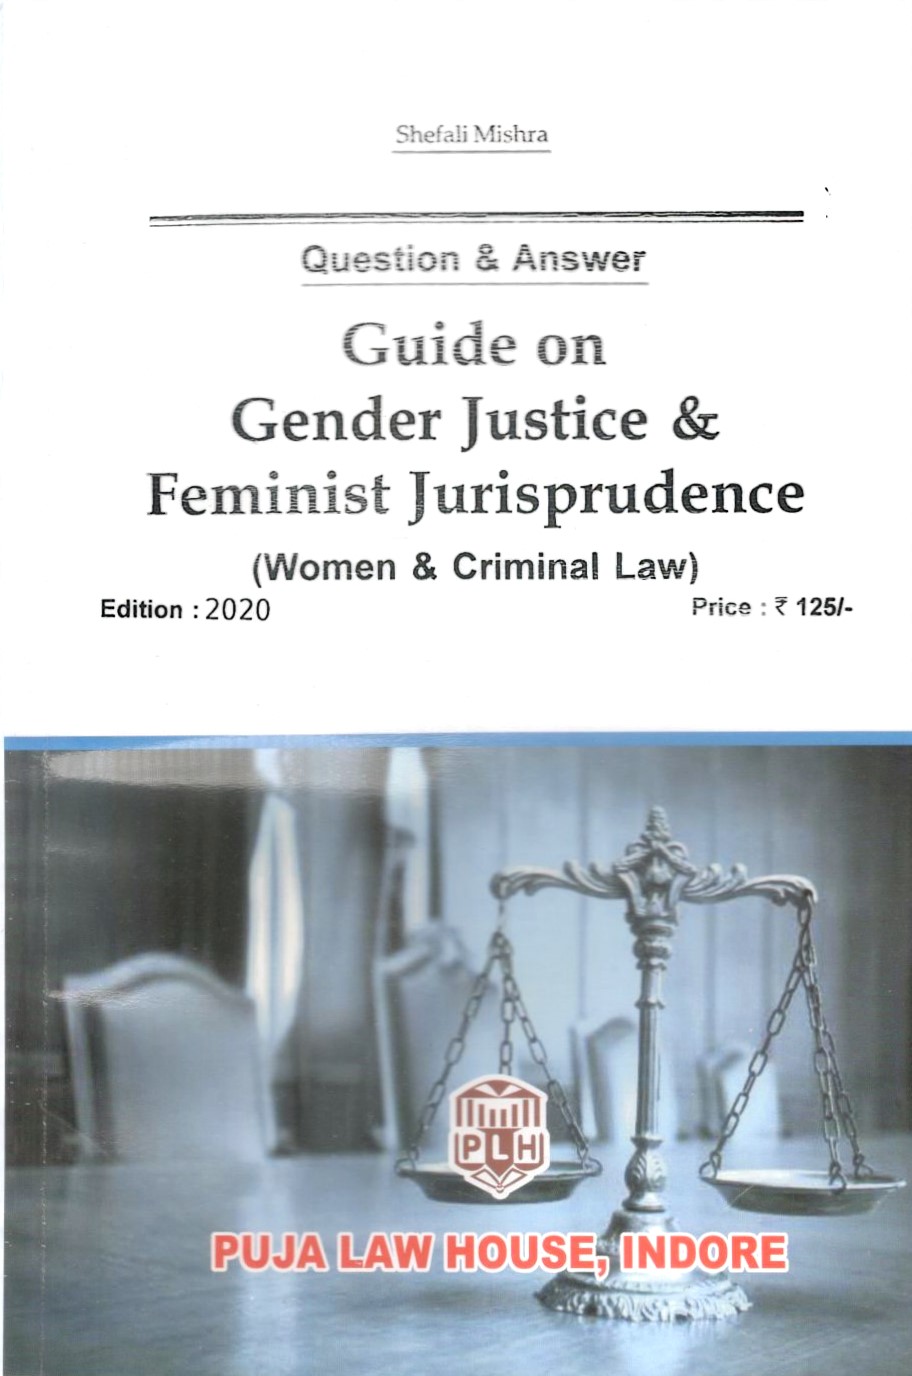 Question & Answer Guide on Gender Justice & Feminist Jurisprudence (Women & Criminal Law)